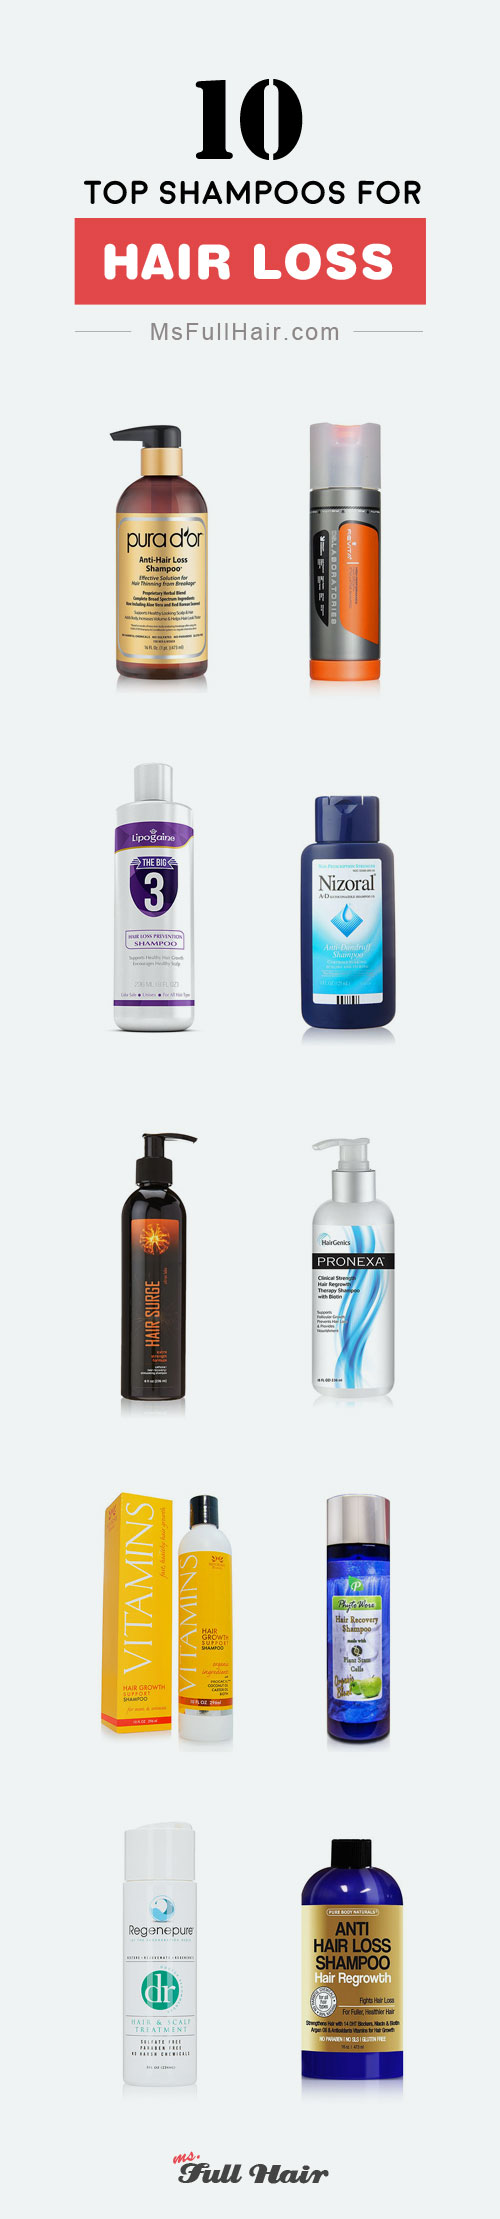 best hair loss shampoo 2017 for thinning hair